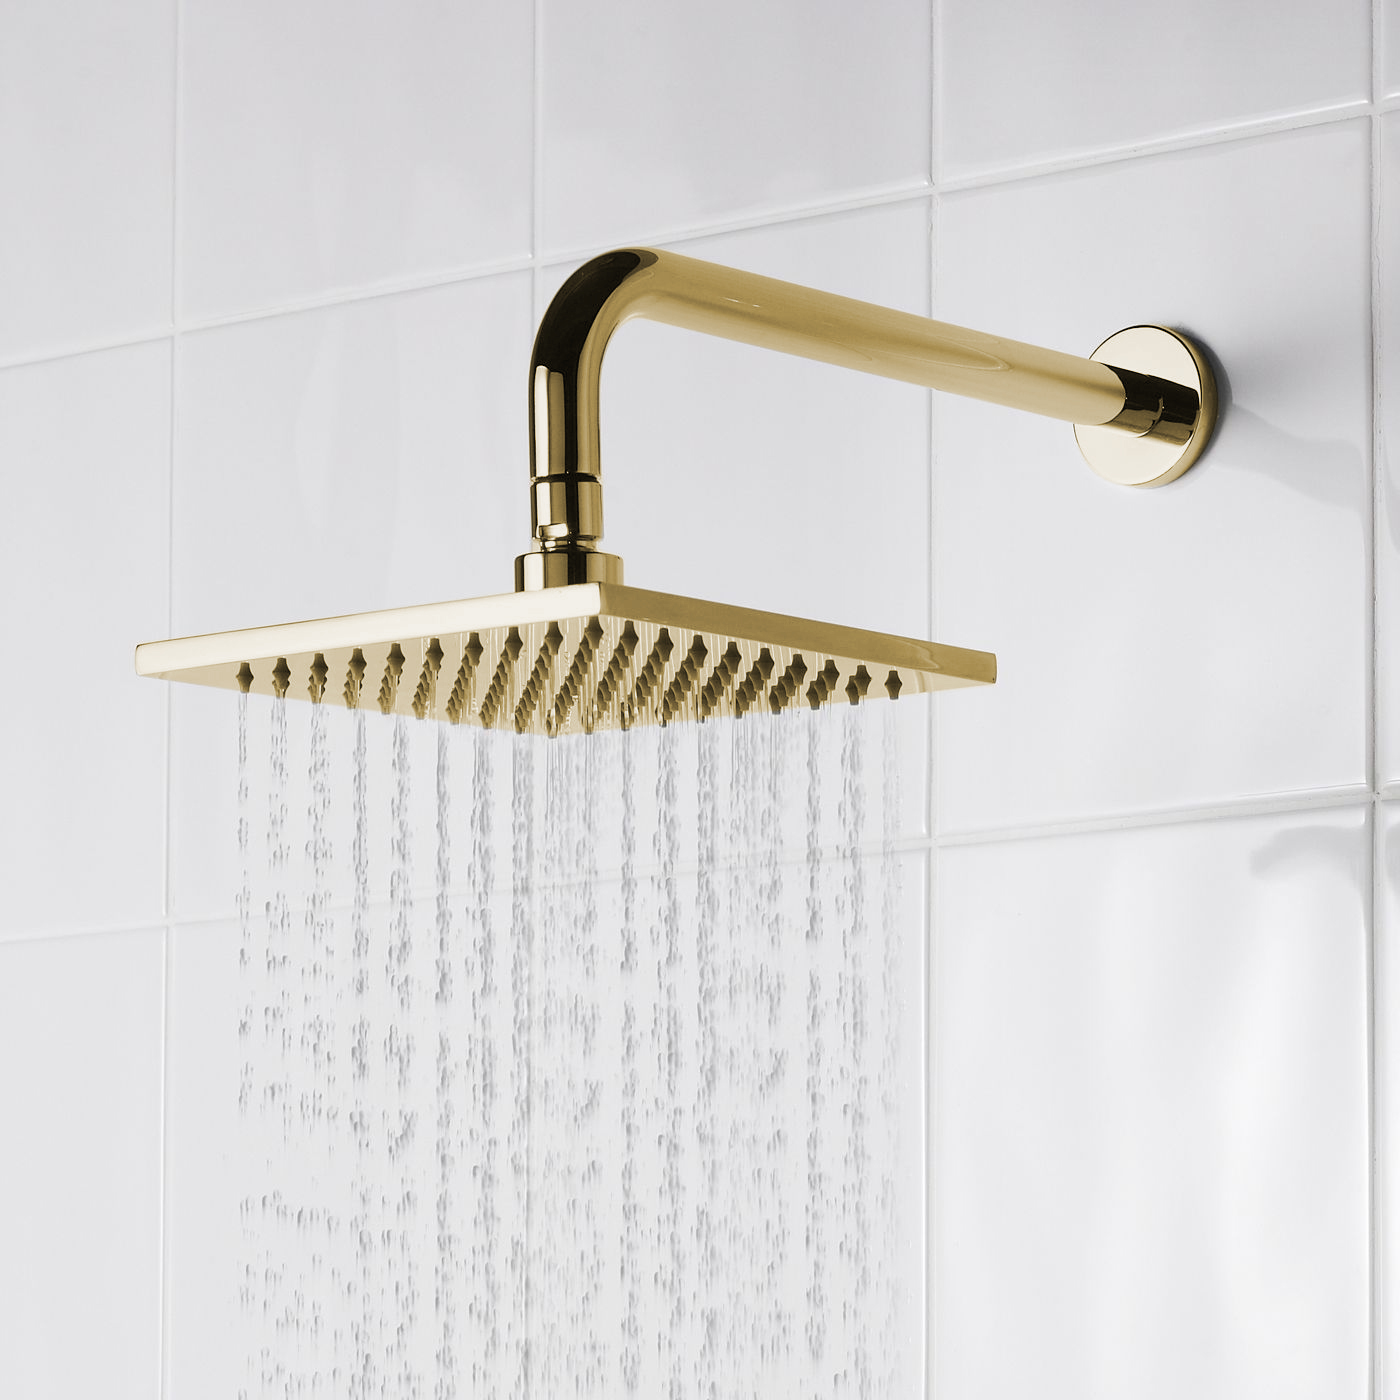 8" Gold Sqaure Rainfall Shower Head 2-Way Mixing Valve Hand Shower Faucet Set 